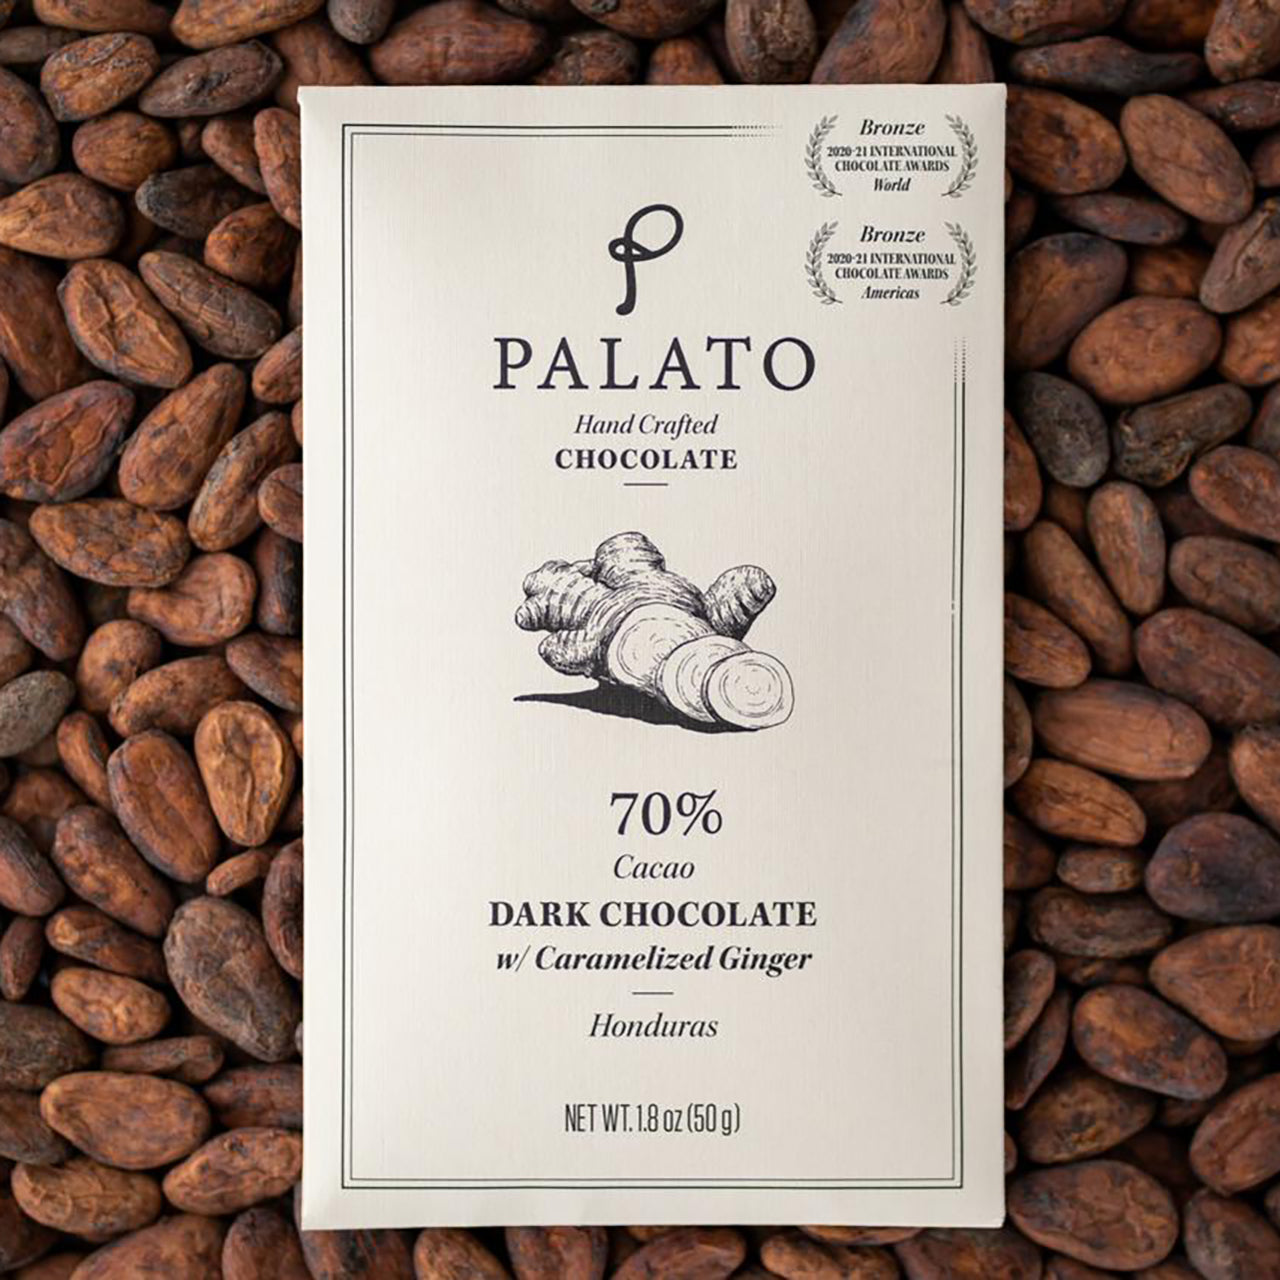 Palato Chocolate パラトチョコレート 70%カカオ ダークチョコレートキャラメライズジンジャー